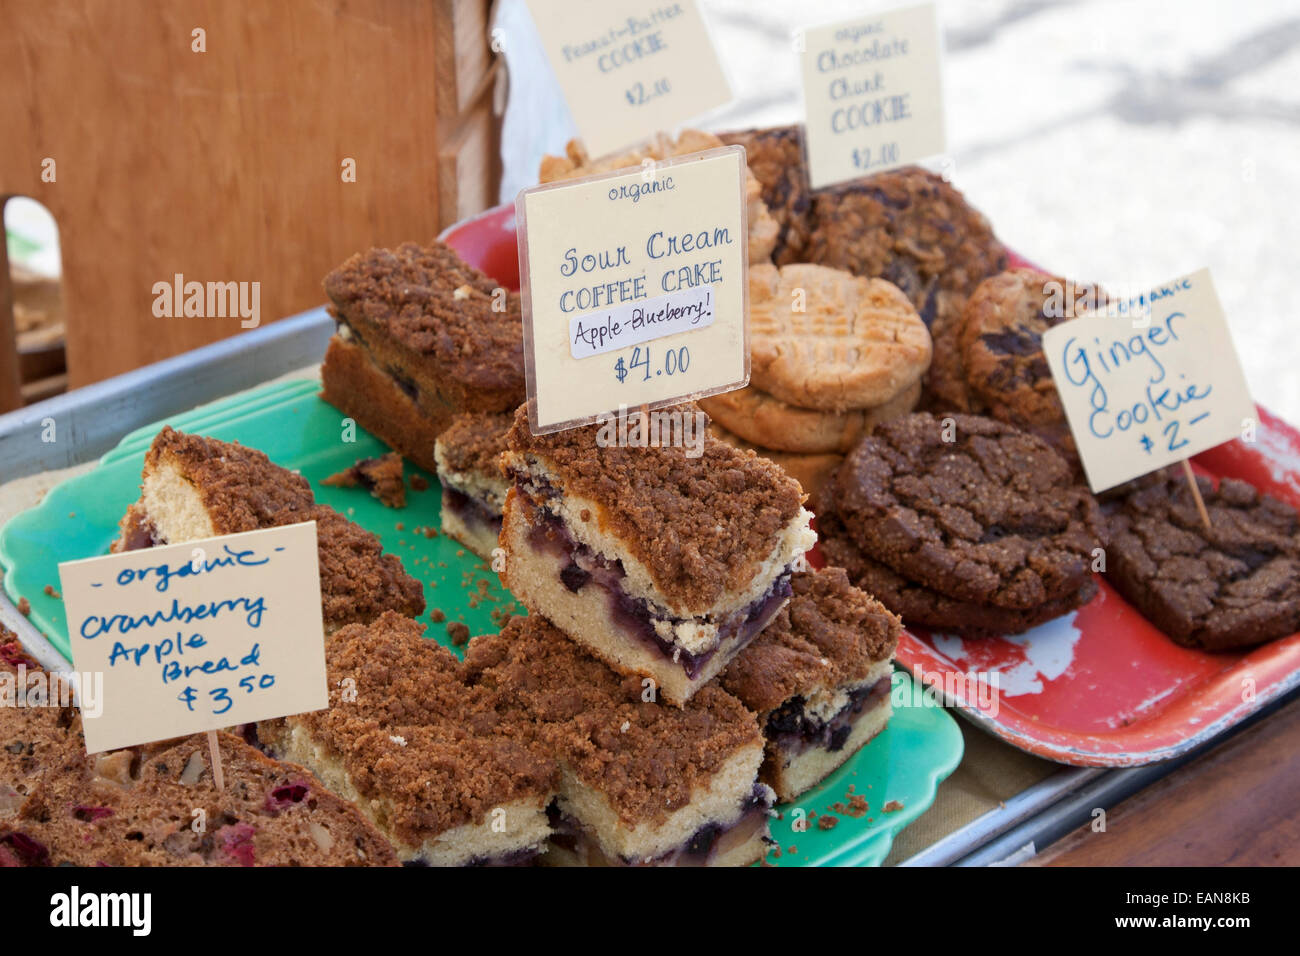 Baked goods at the Berkeley Farmer's Market. Stock Photo